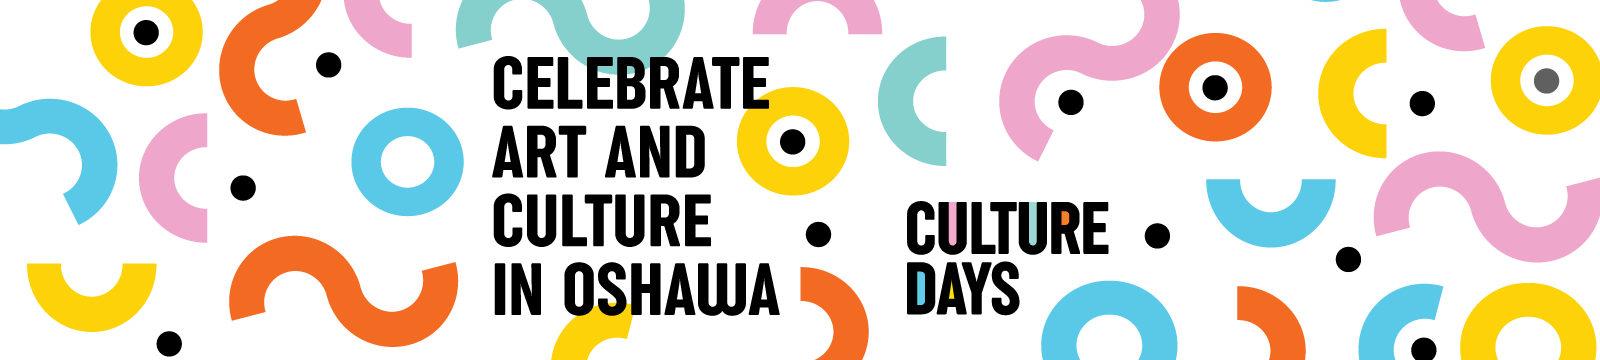 Culture Days: Celebrate Arts and Culture in Oshawa Graphic